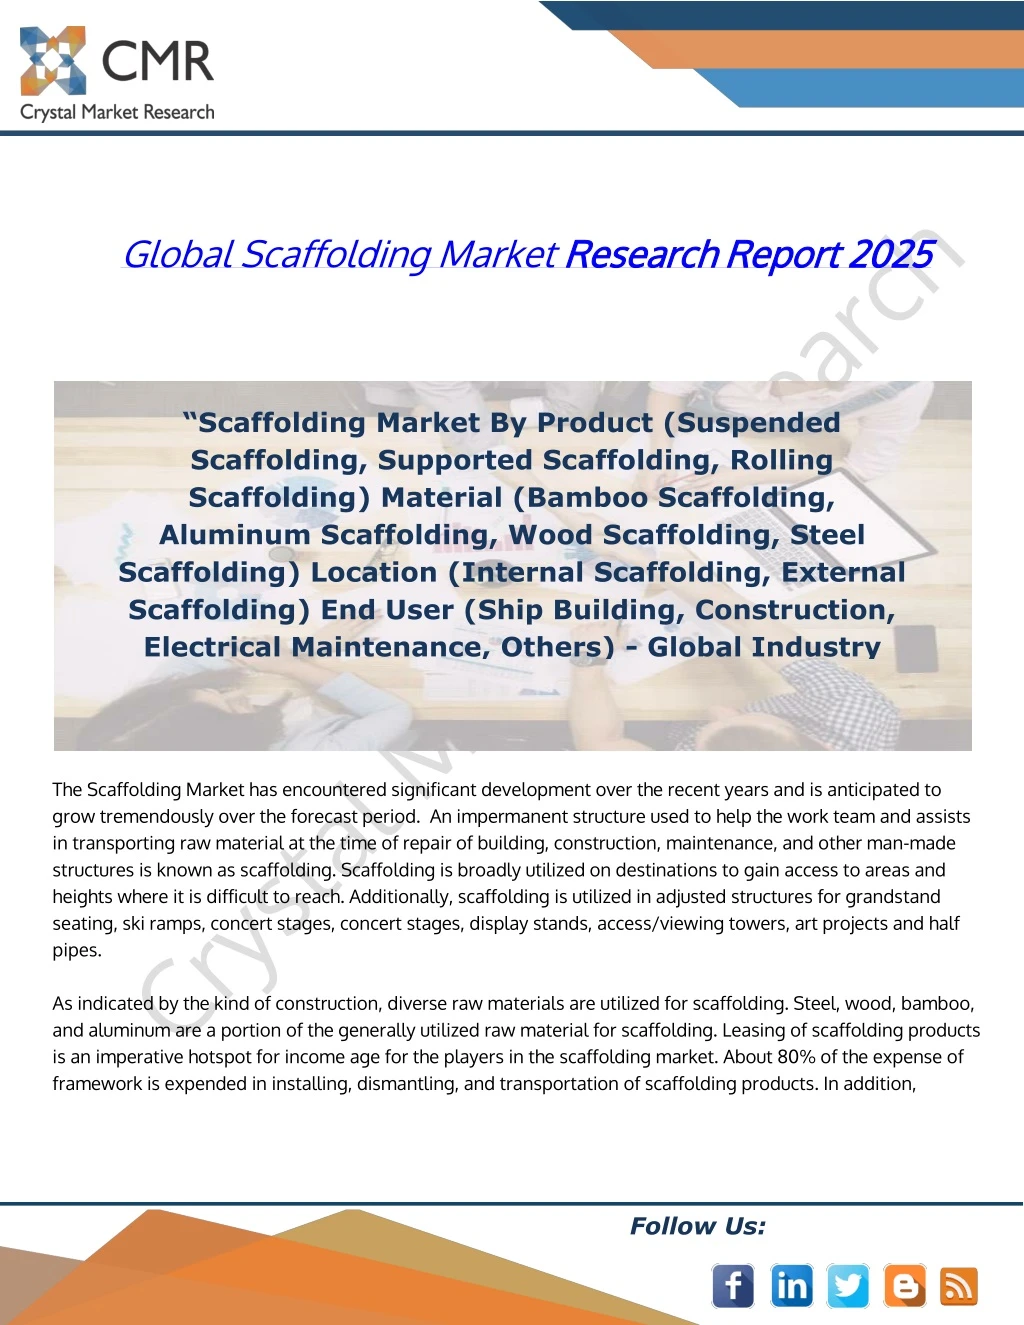 global scaffolding market research